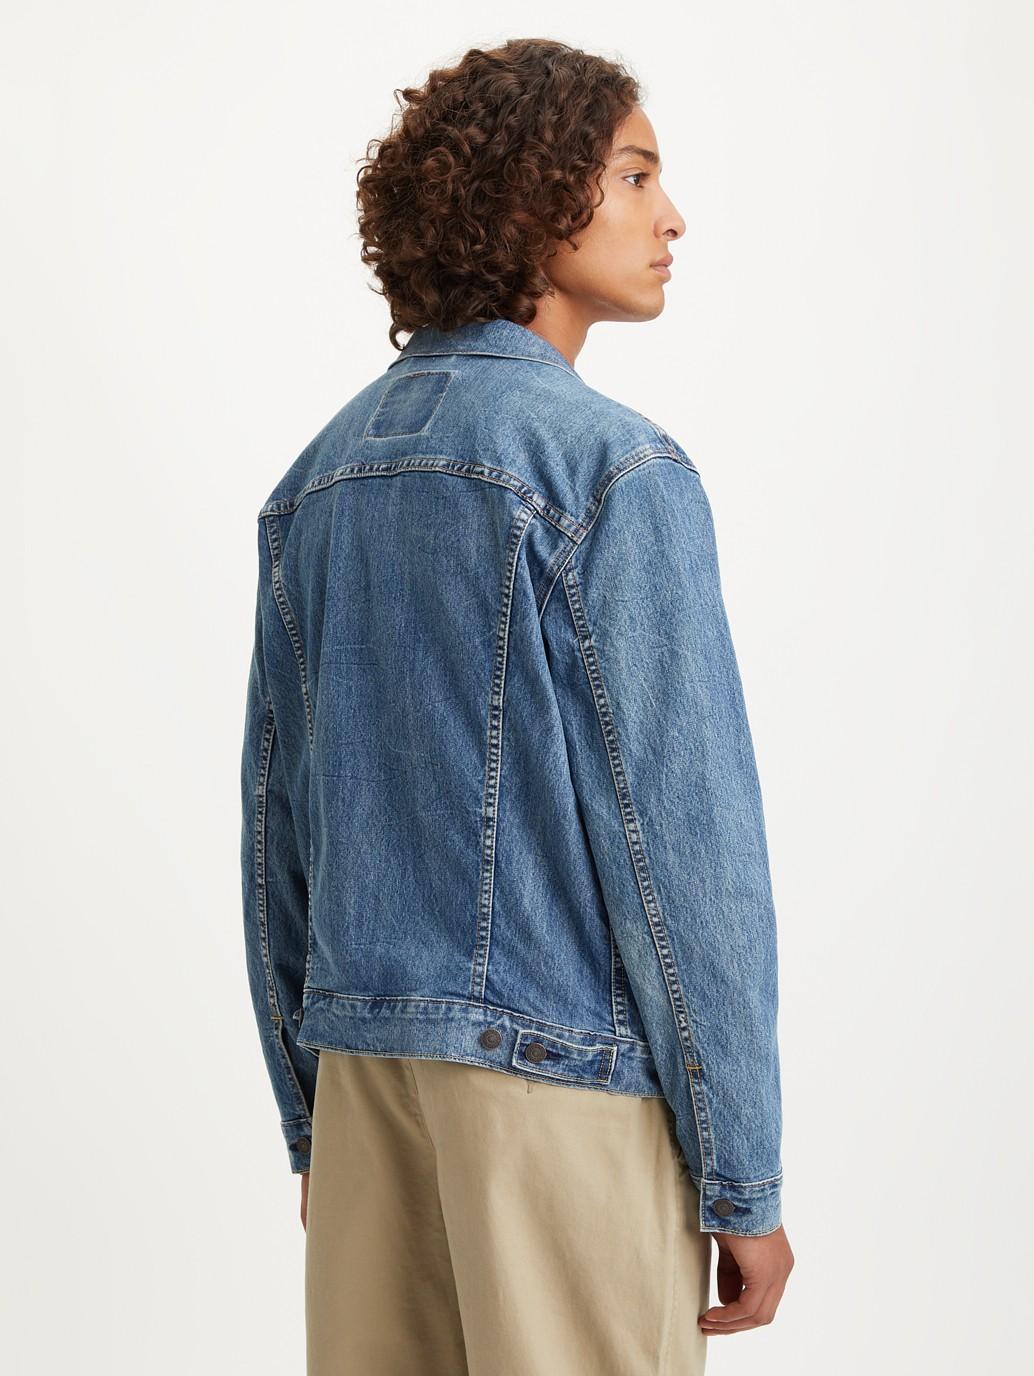 Buy Levi's® Men's Trucker Jacket| Levi’s® Official Online Store PH